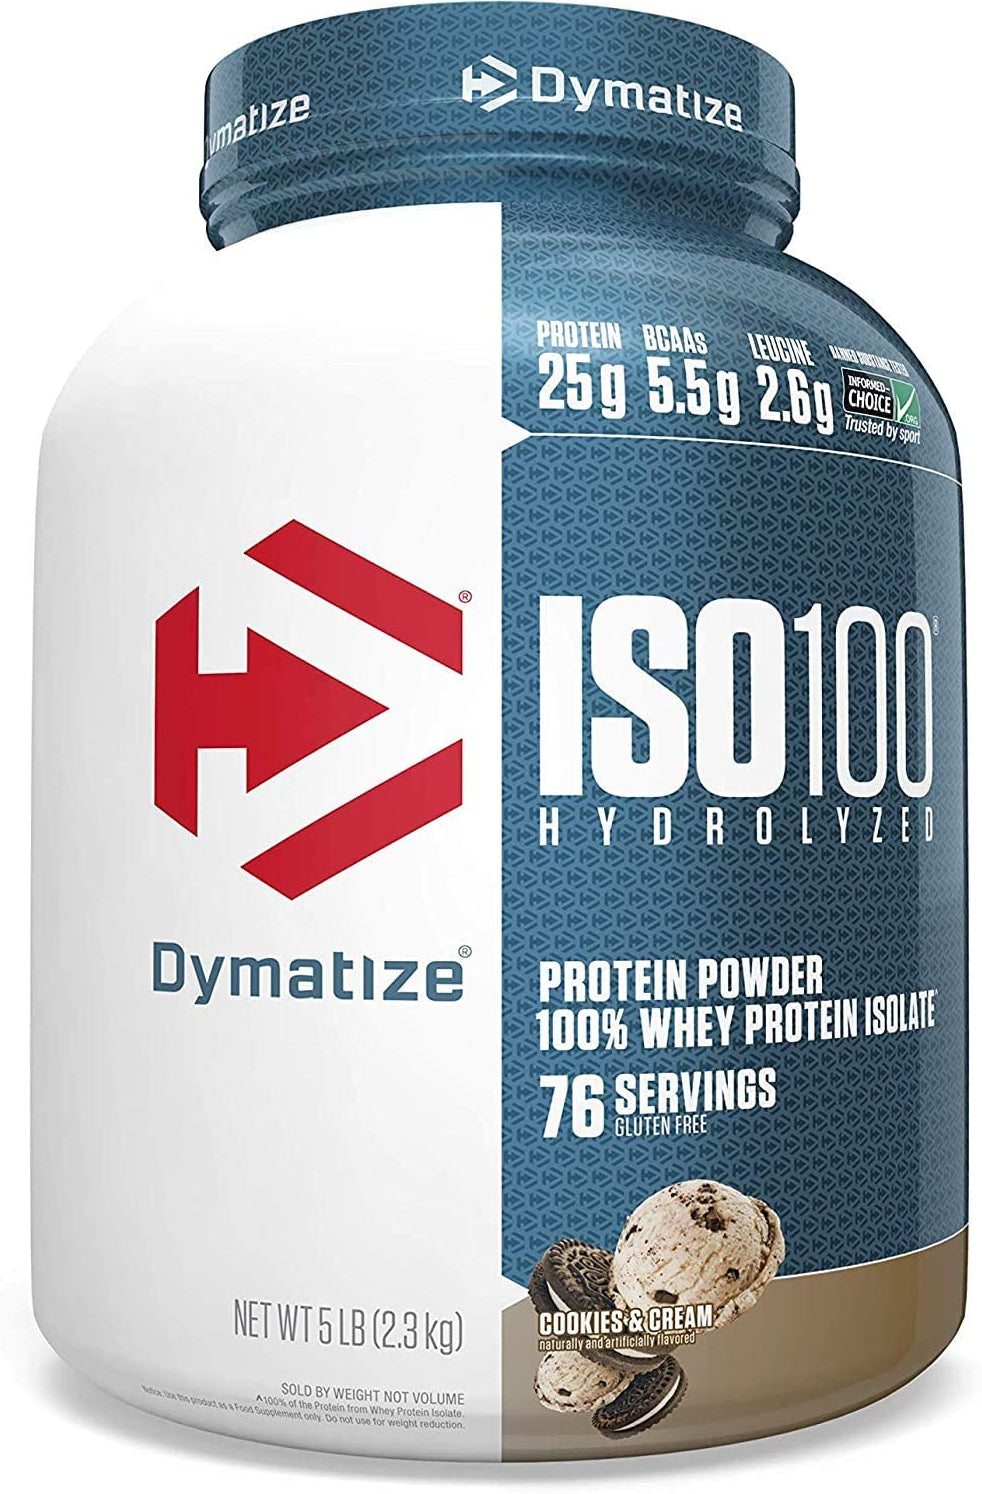 hydrolyzed whey protein isolate, iso100 protein powder, dymatize iso 100